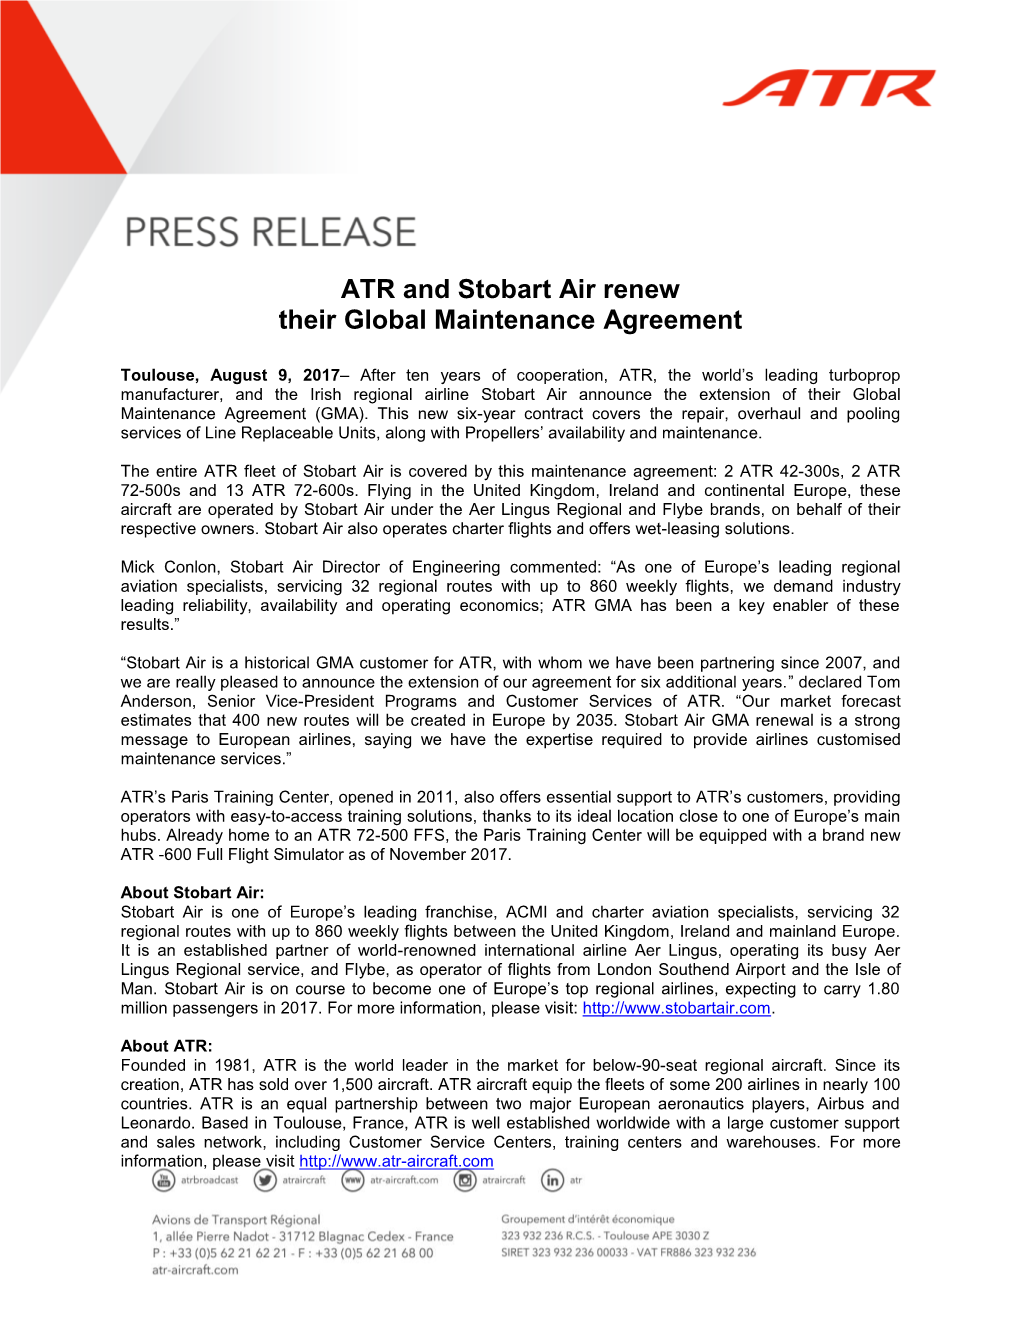 ATR and Stobart Air Renew Their Global Maintenance Agreement